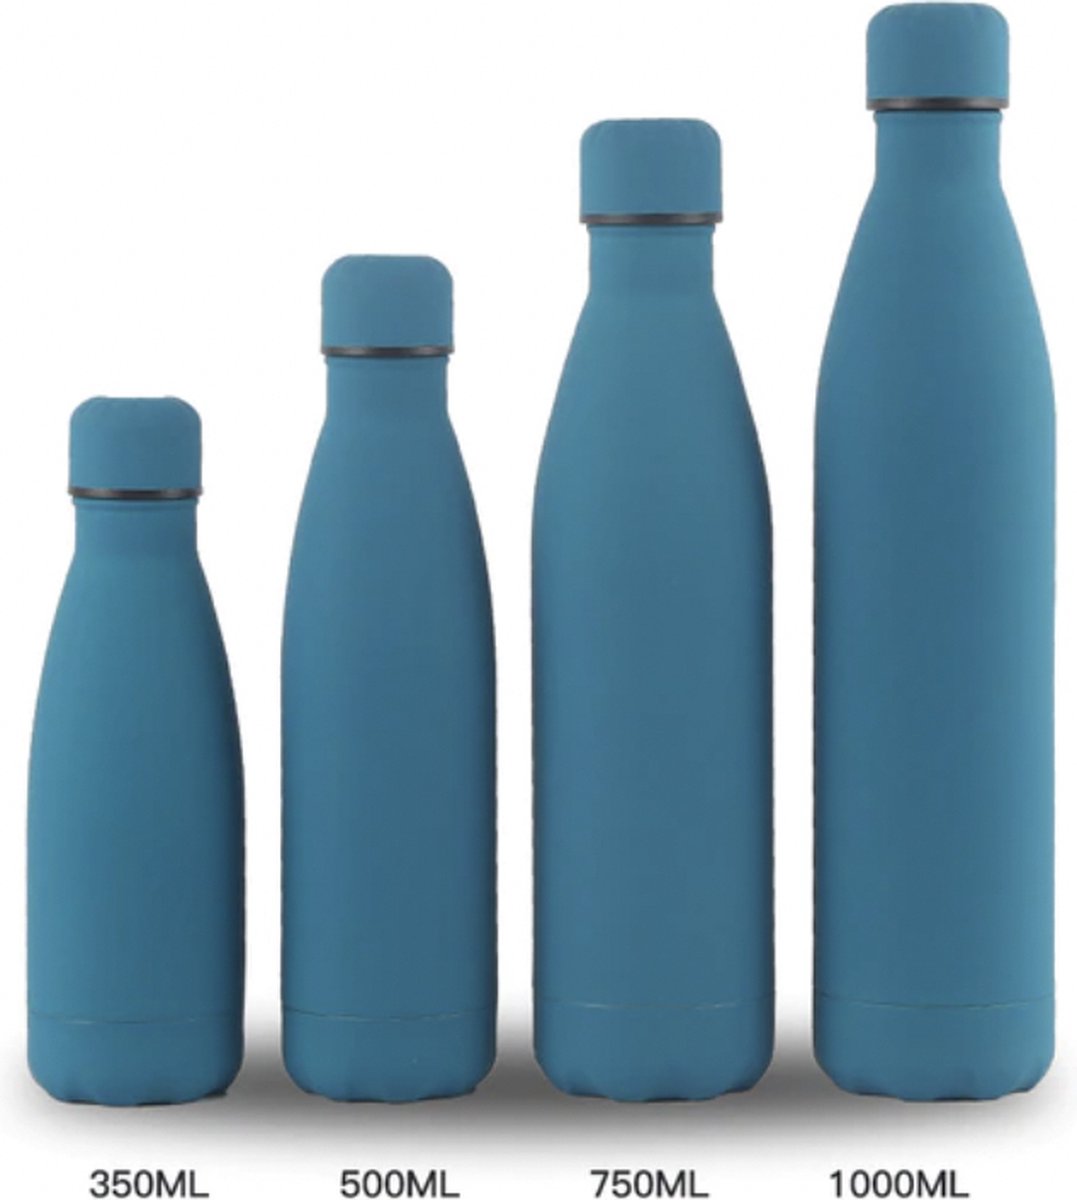 Bella's Shop - Thermosfles - Blauw/Groen - 1000Ml - Geïsoleerde - Rvs - Thermos - Mok - Sport - Water Fles - Rubber - Geschilderde Oppervlak - Thermoskan - Koffie Cup - Fles